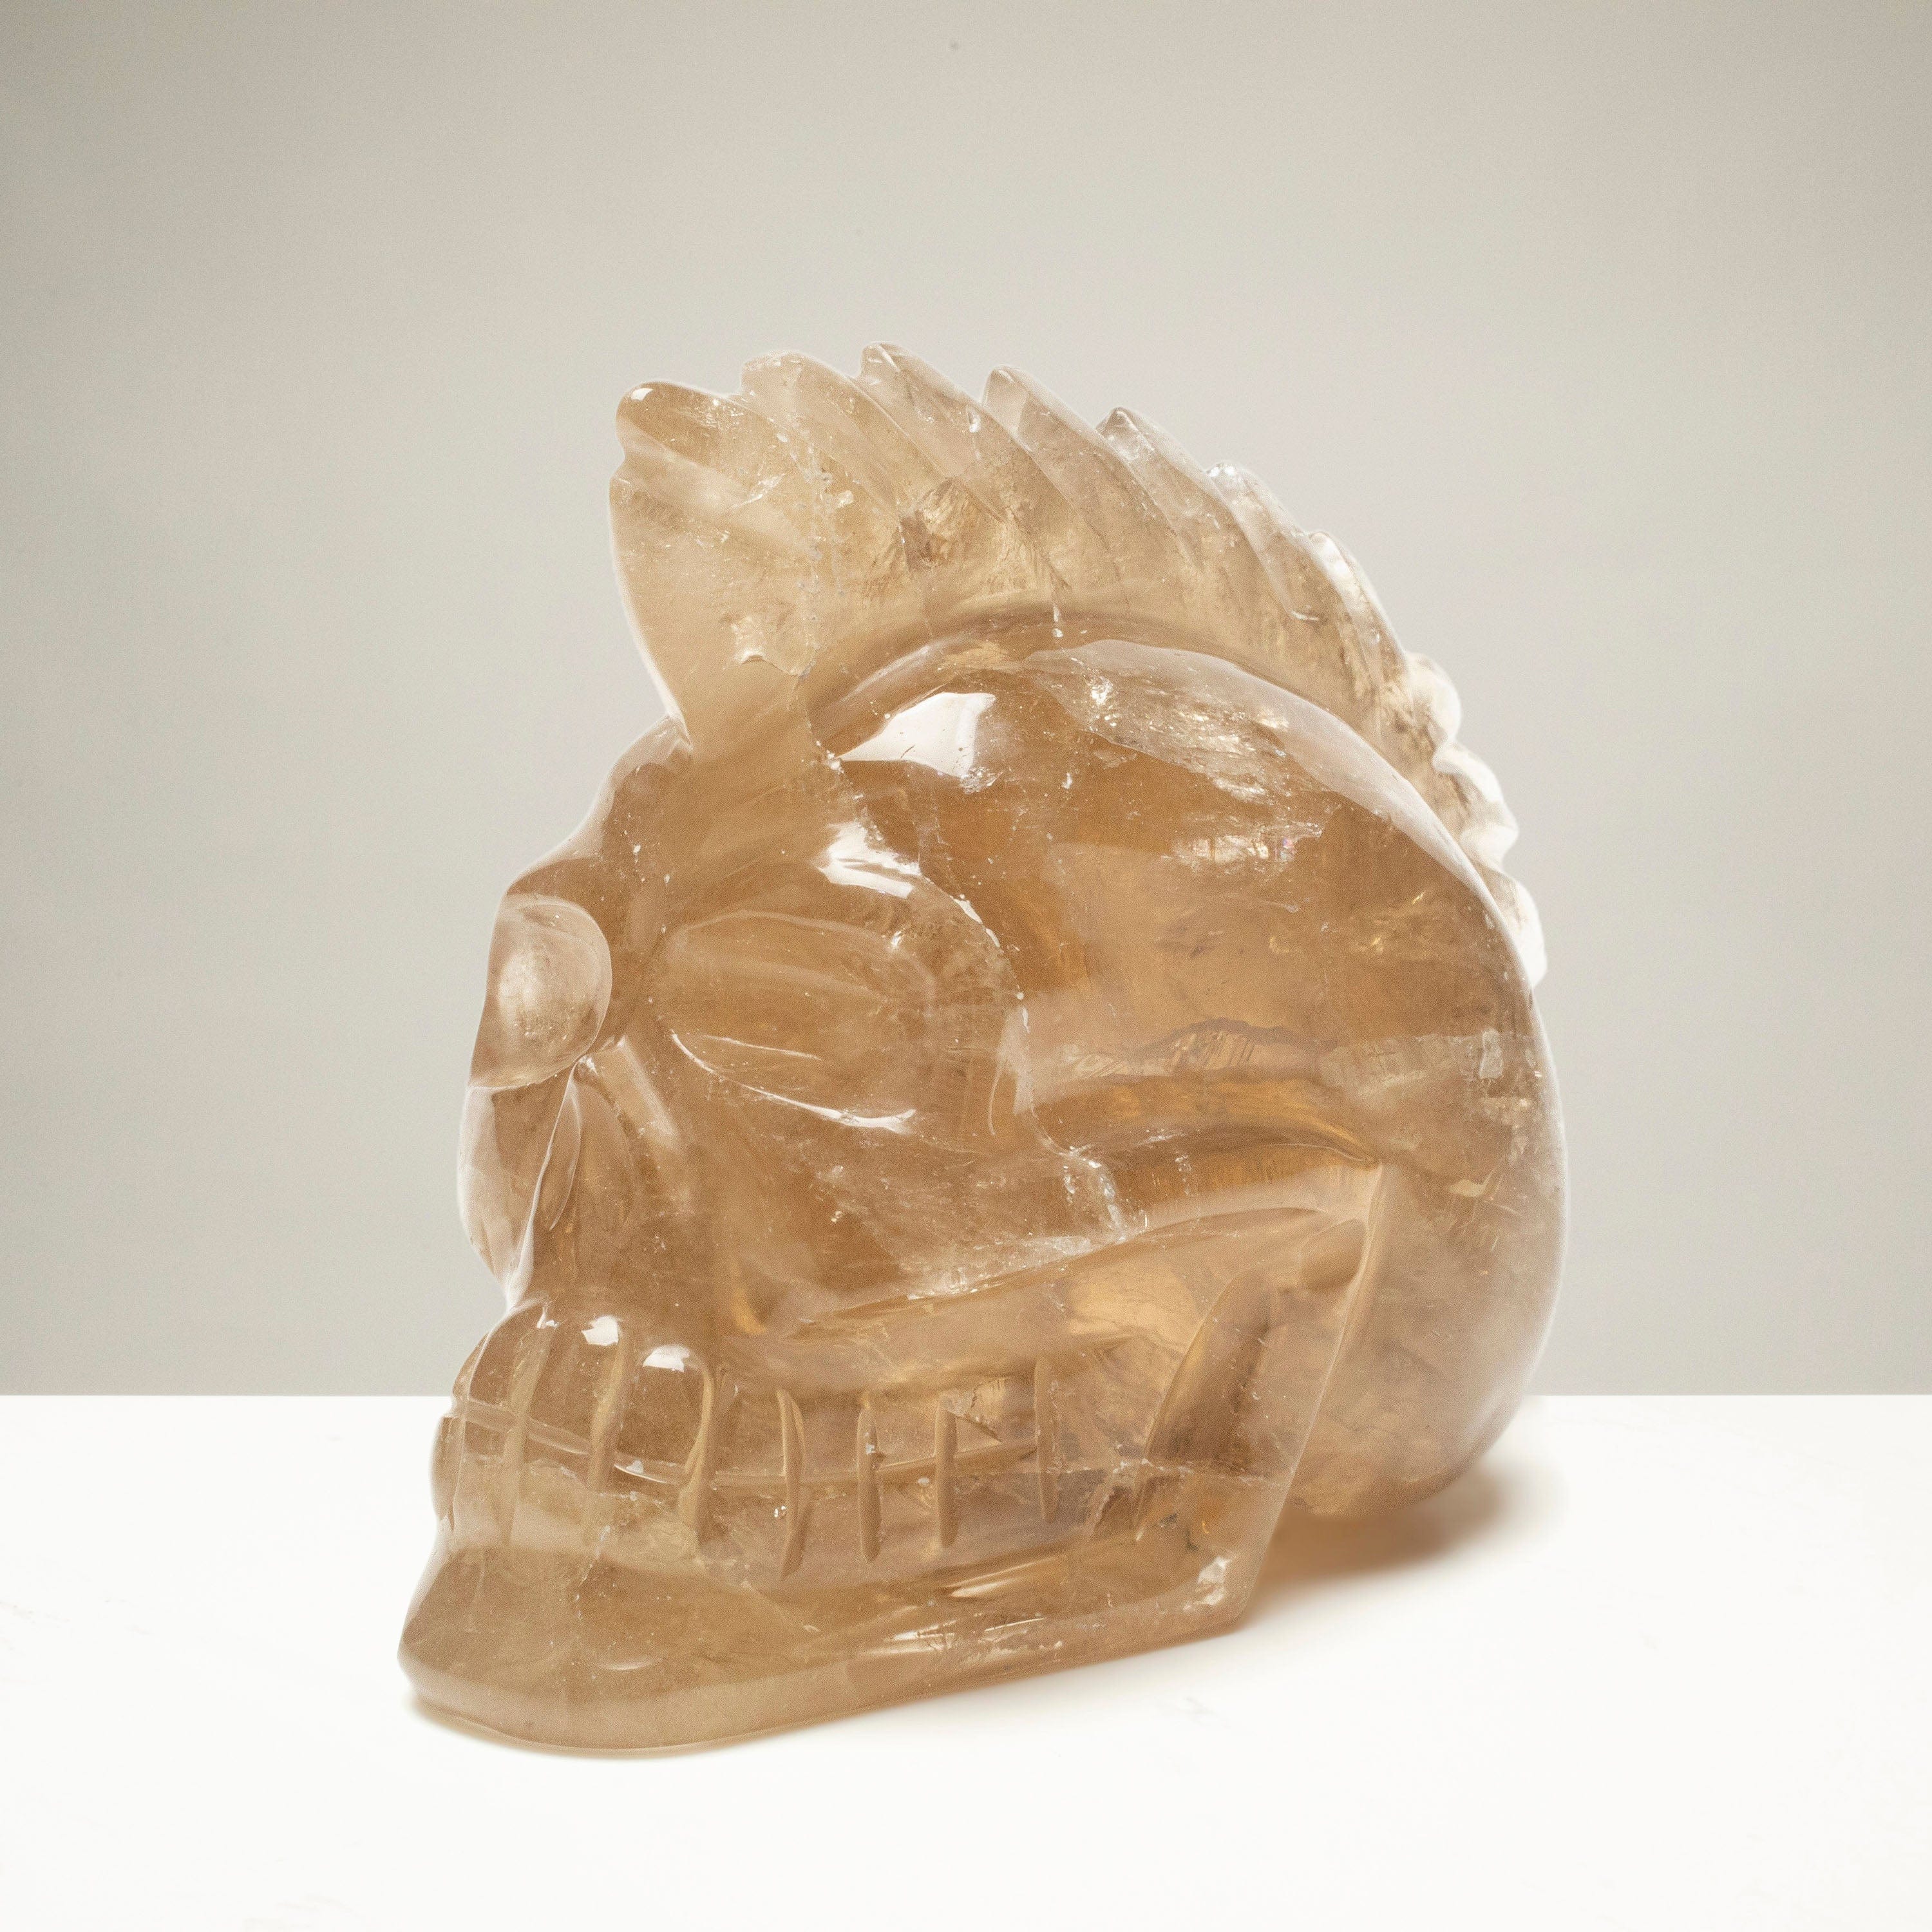 KALIFANO Smoky Quartz Smoky Quartz Skull Carving from Brazil - 3.5" / 750 grams SK4500.006